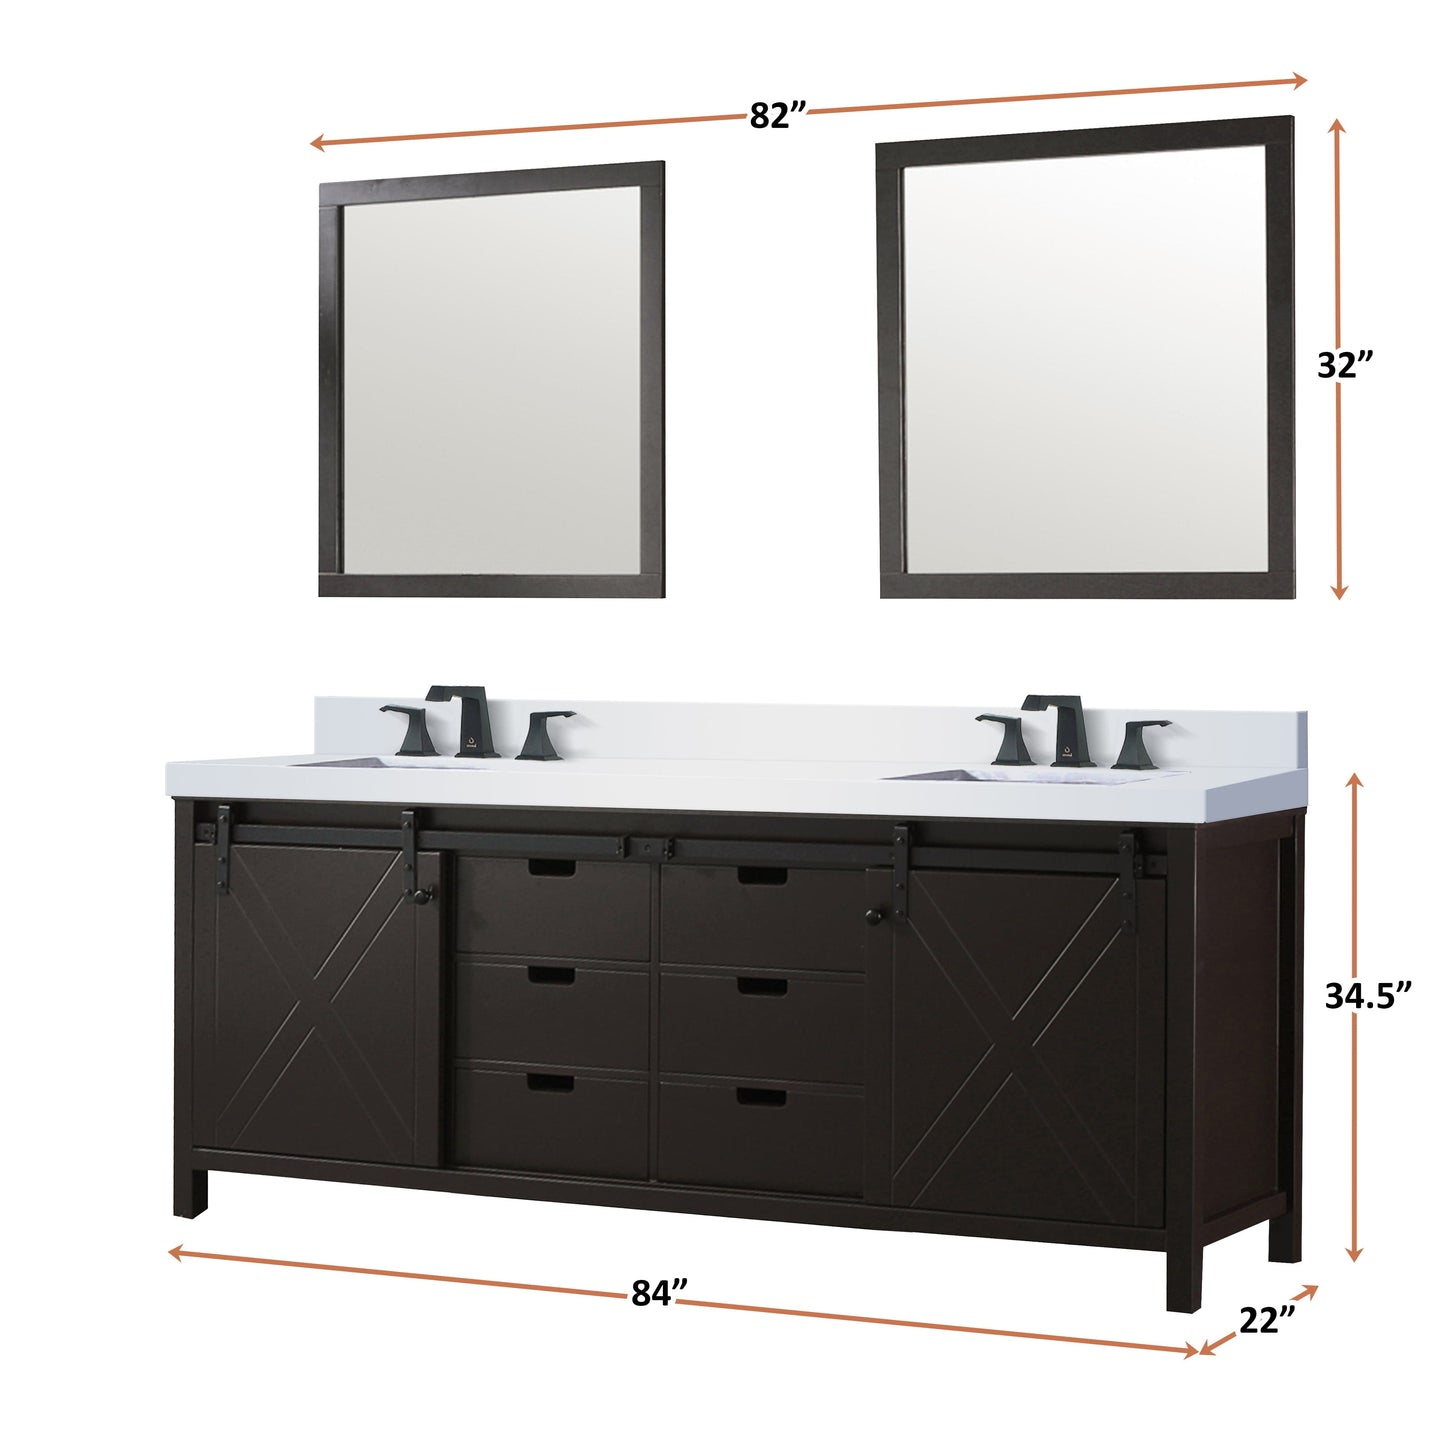 Bell + Modern Bathroom Vanity Ketchum 84" x 22" Double Bath Vanity